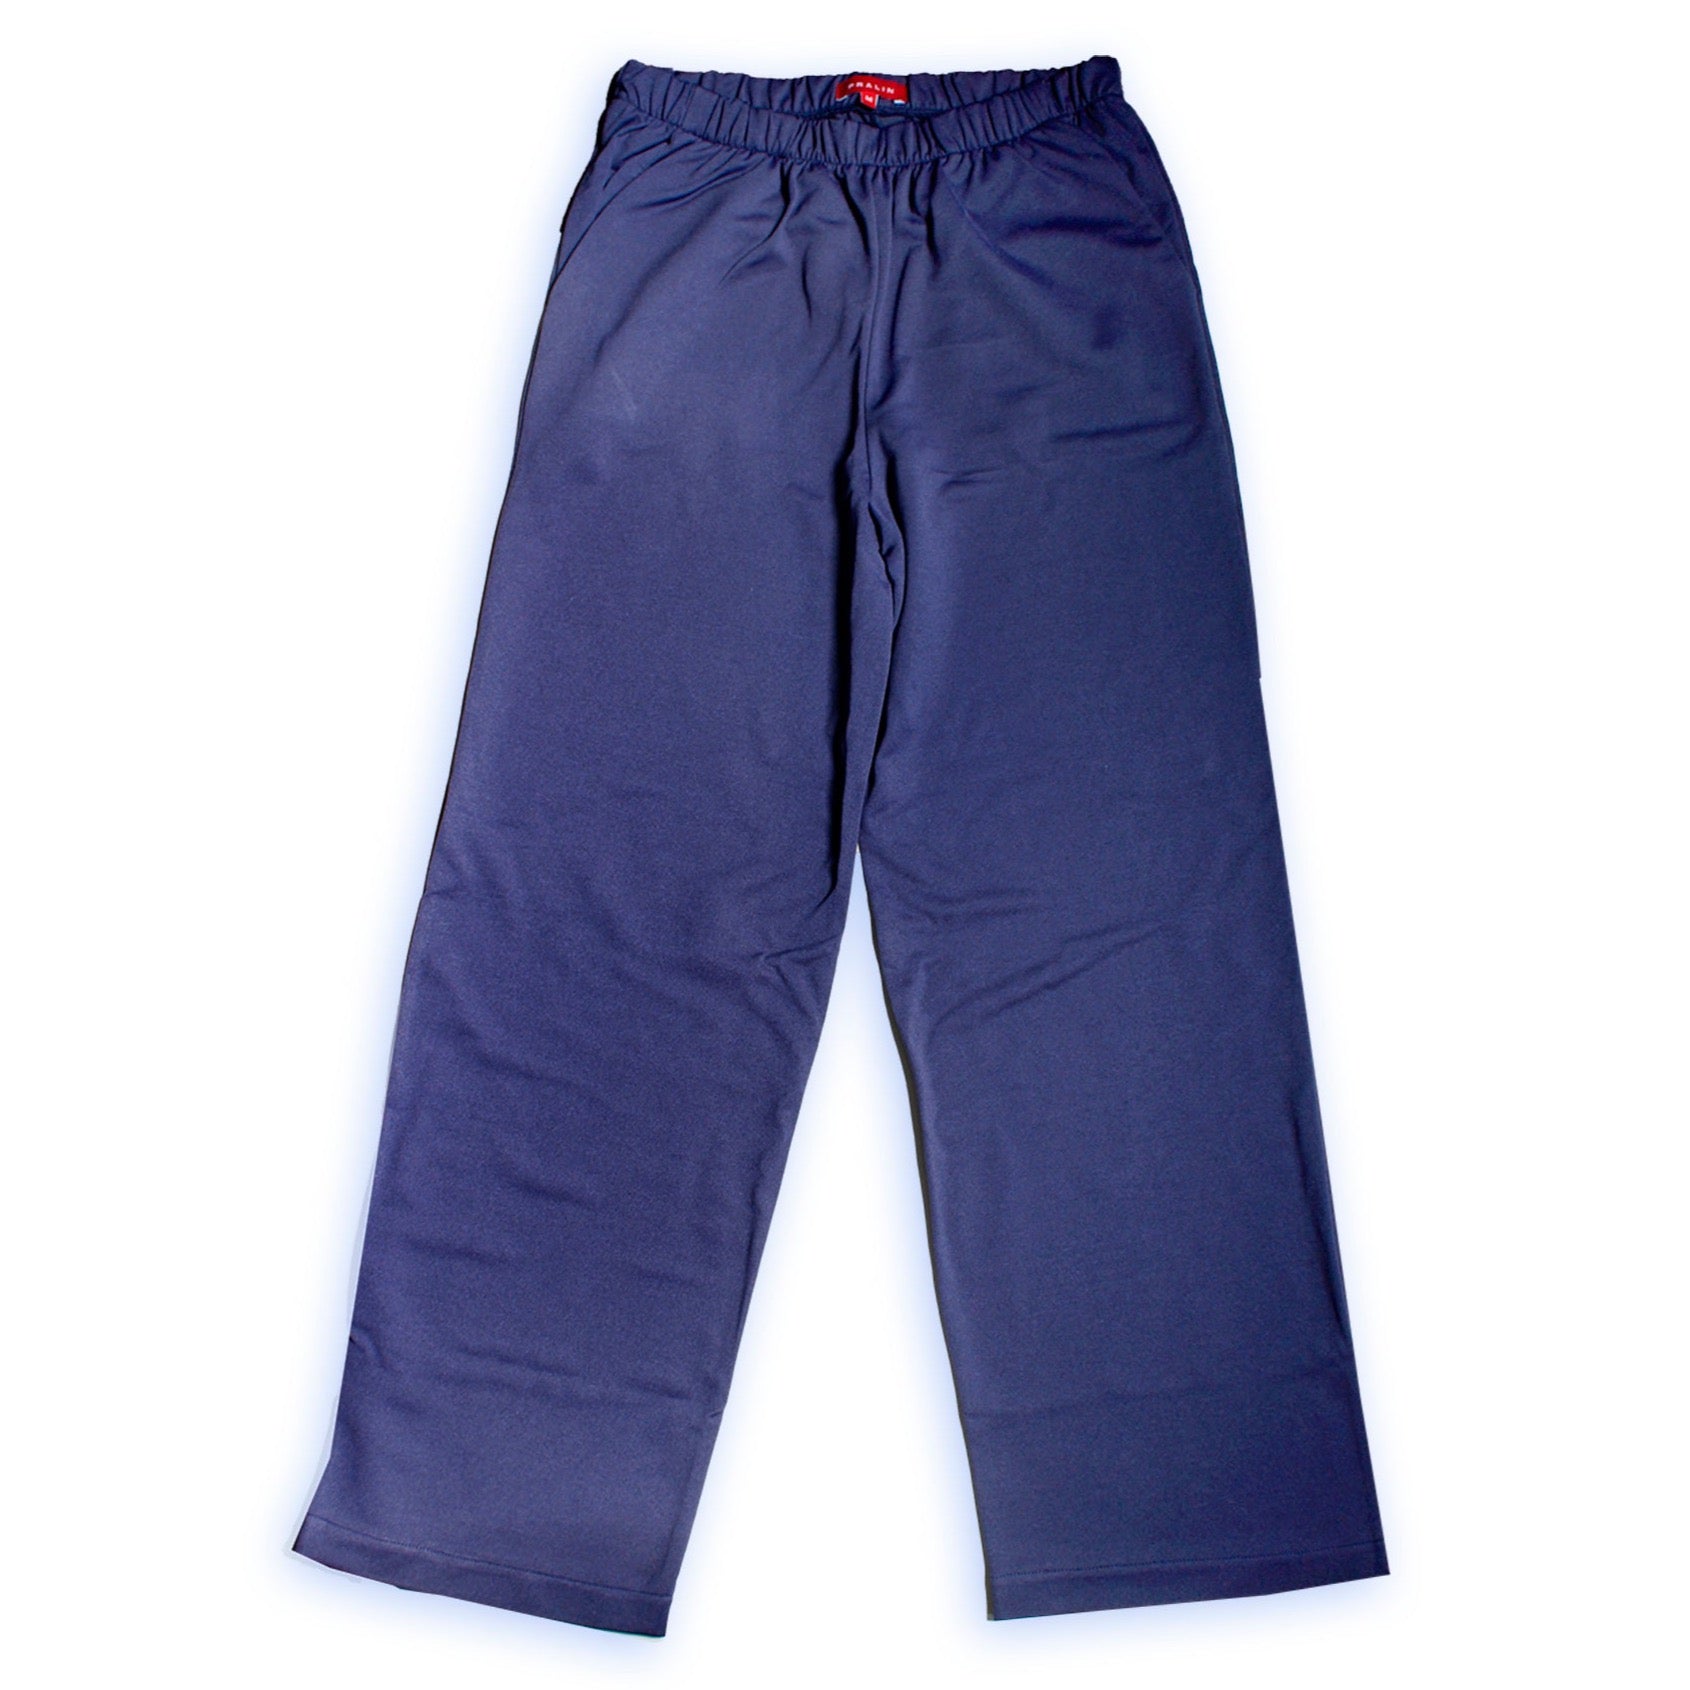 Pants Rectos Azul Marino 10062 de Mujer